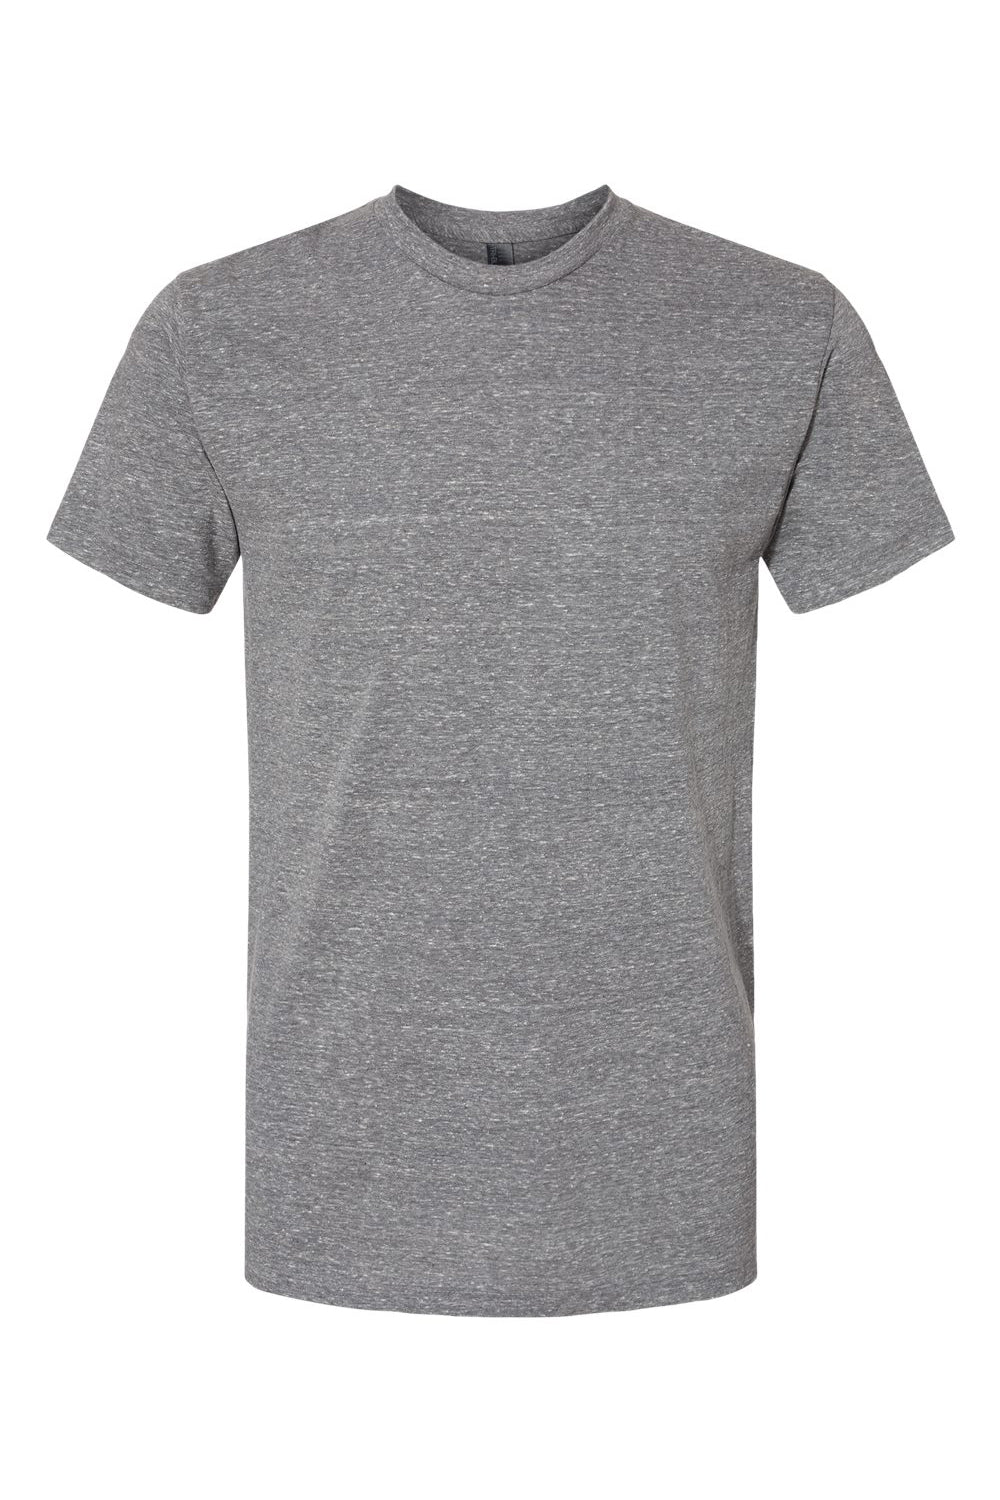 Bayside 5710 Mens USA Made Short Sleeve Crewneck T-Shirt Athletic Grey Flat Front